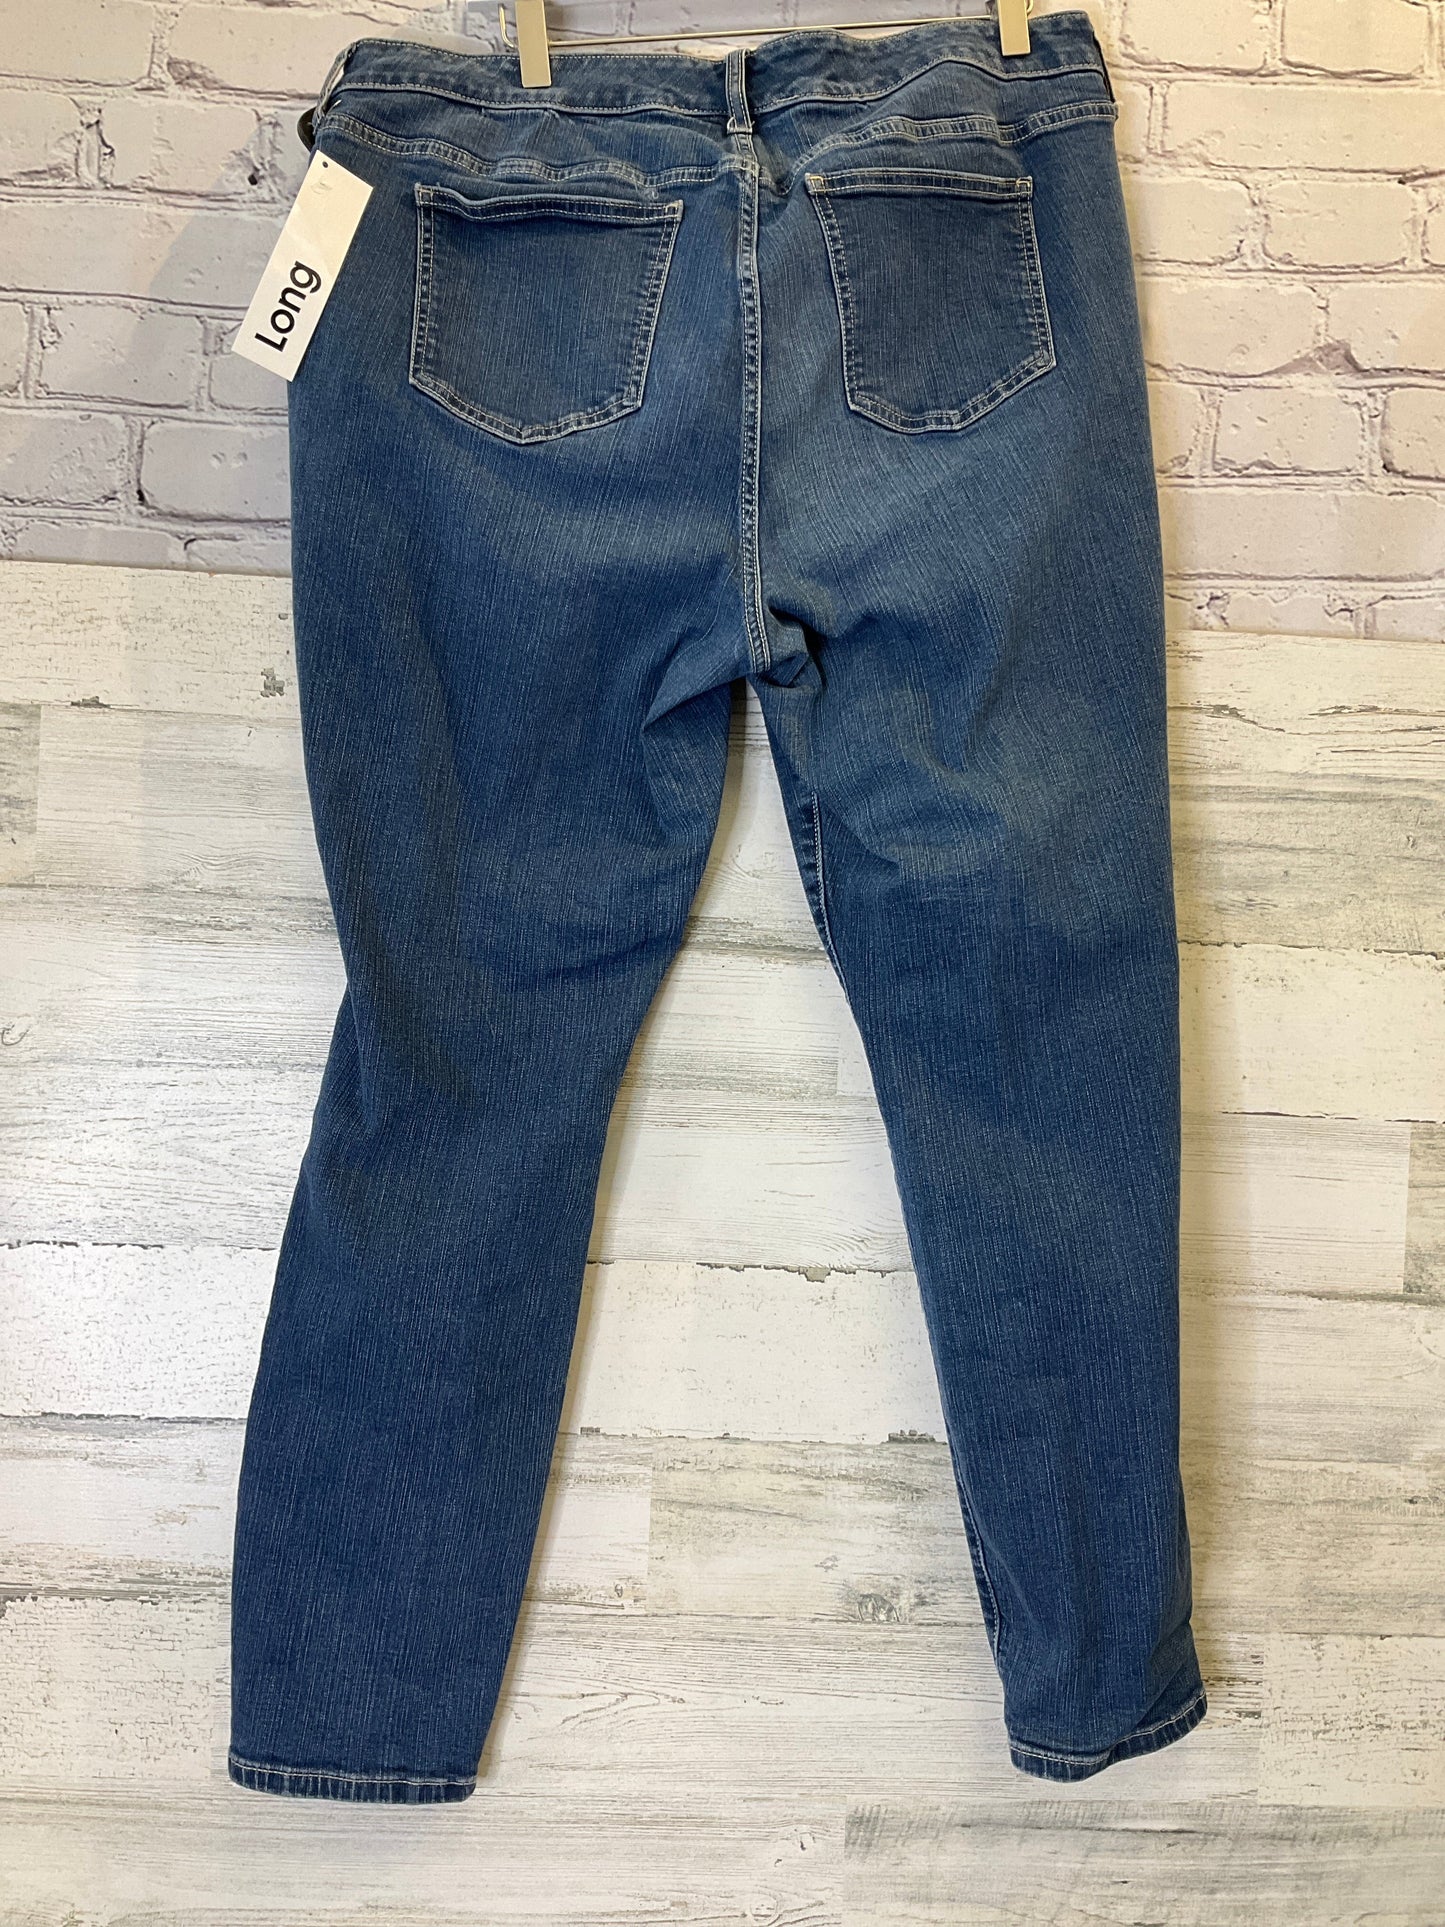 Blue Denim Jeans Straight Torrid, Size 18